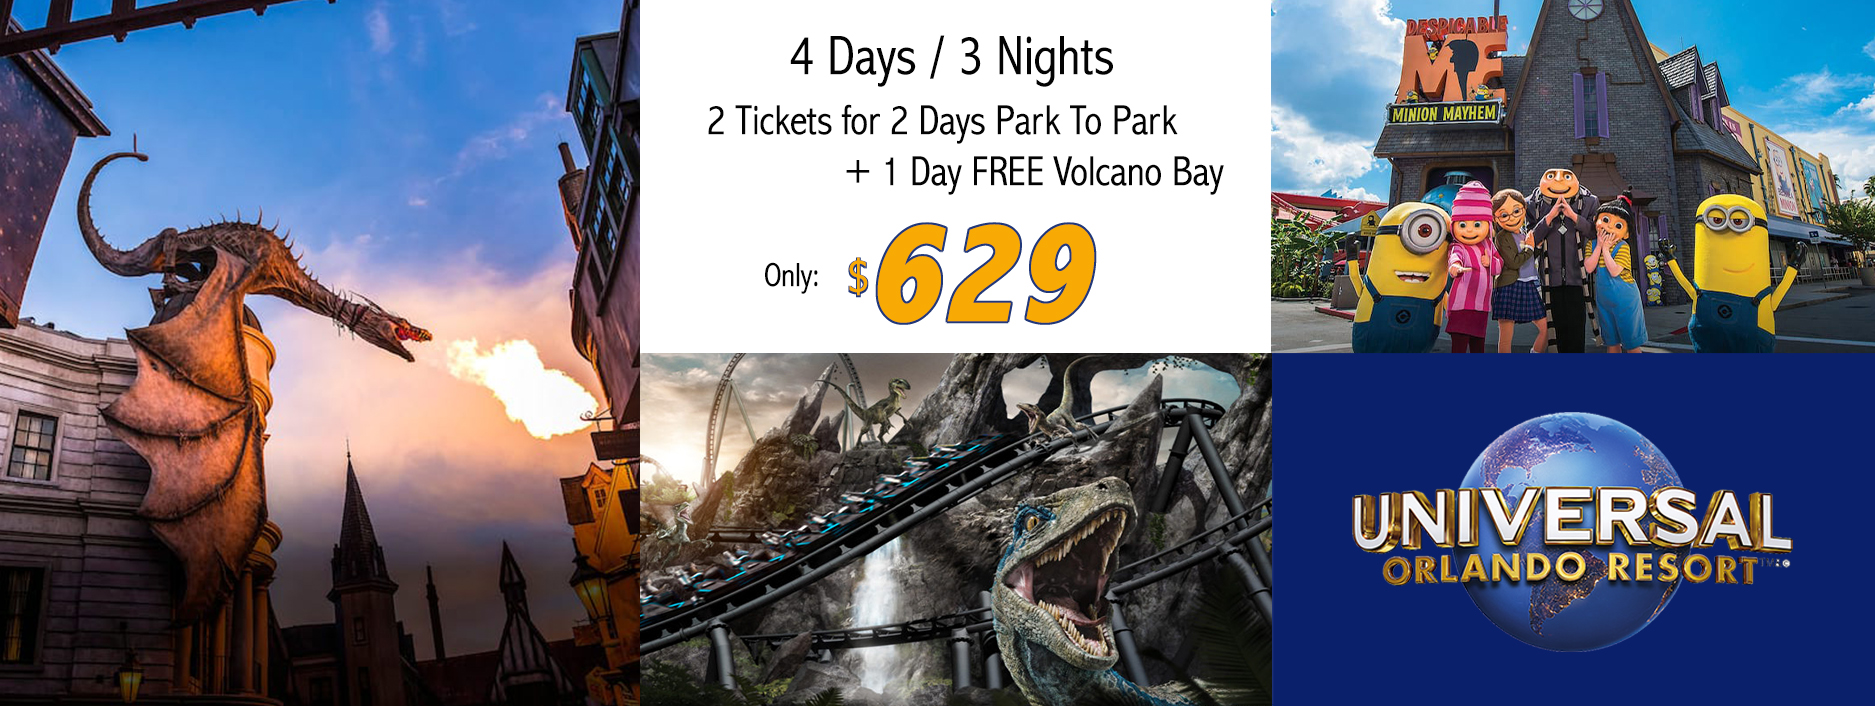 Discount Orlando Tickets, Disney World Vacation, Universal Studios